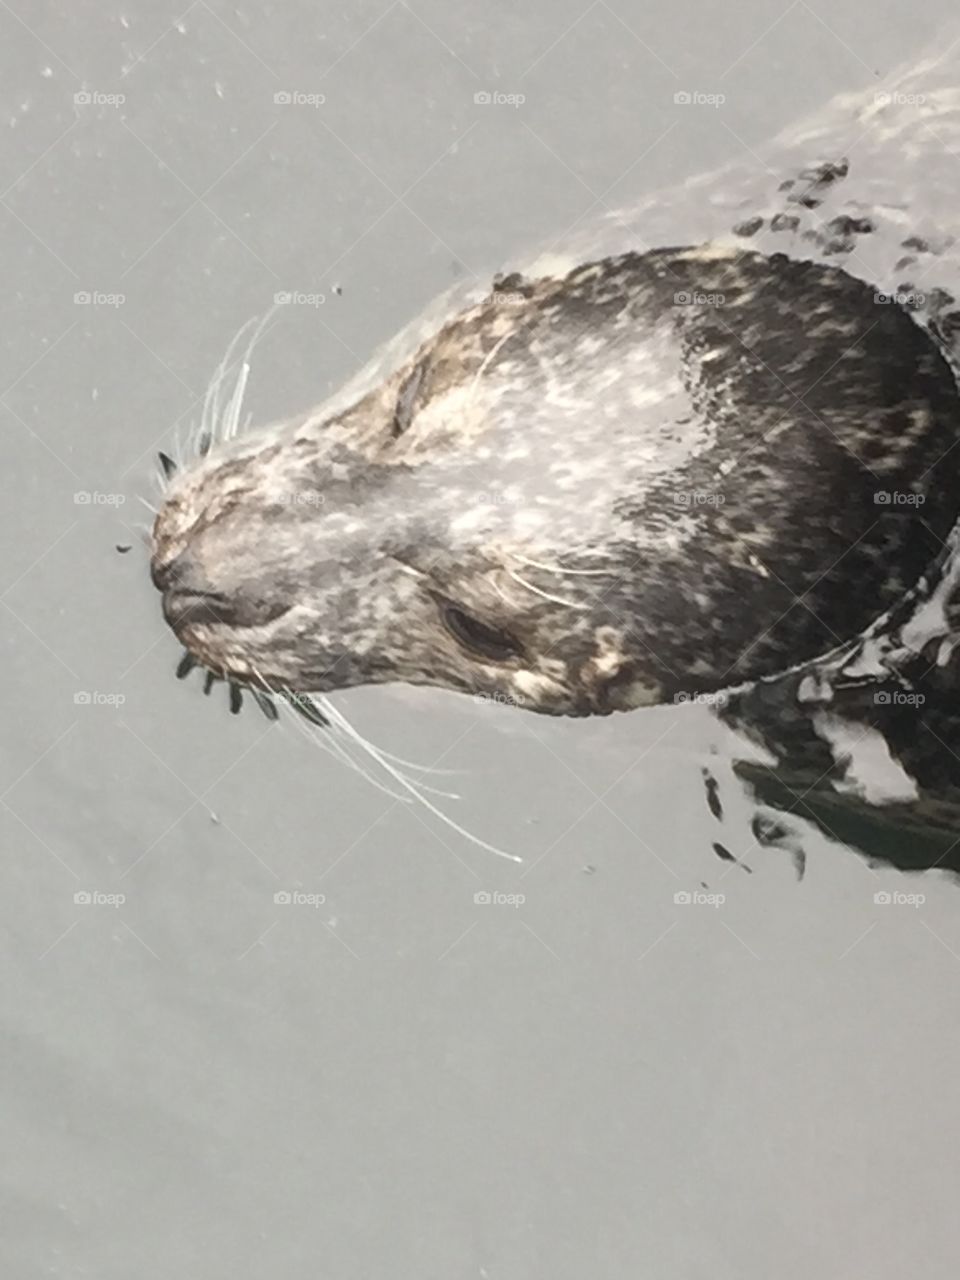 Snorkel the Harbor Seal